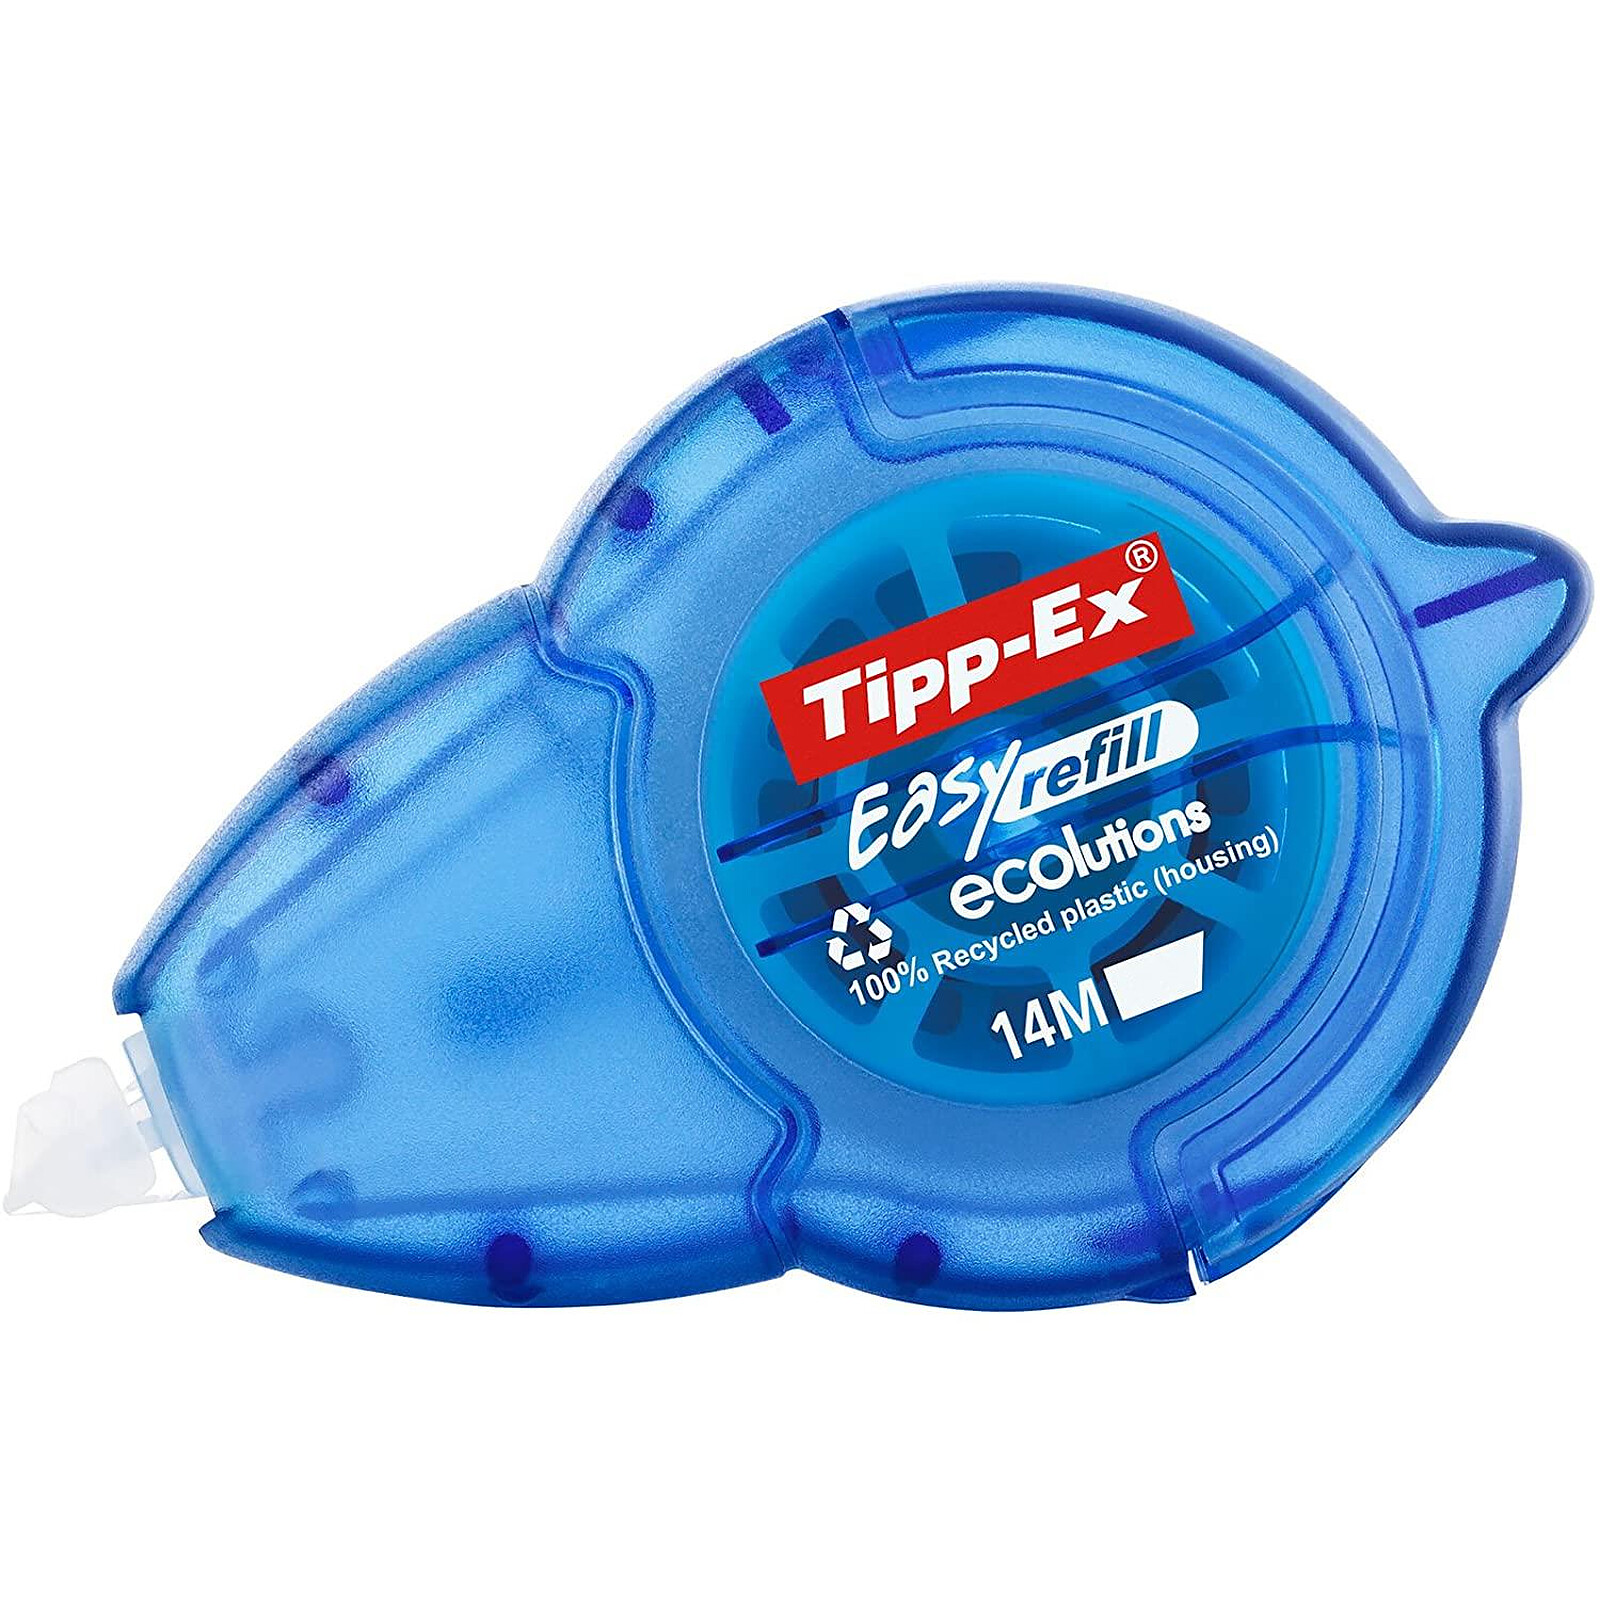 TIPP-EX correcteur minipocket mouse - Correcteur - LDLC